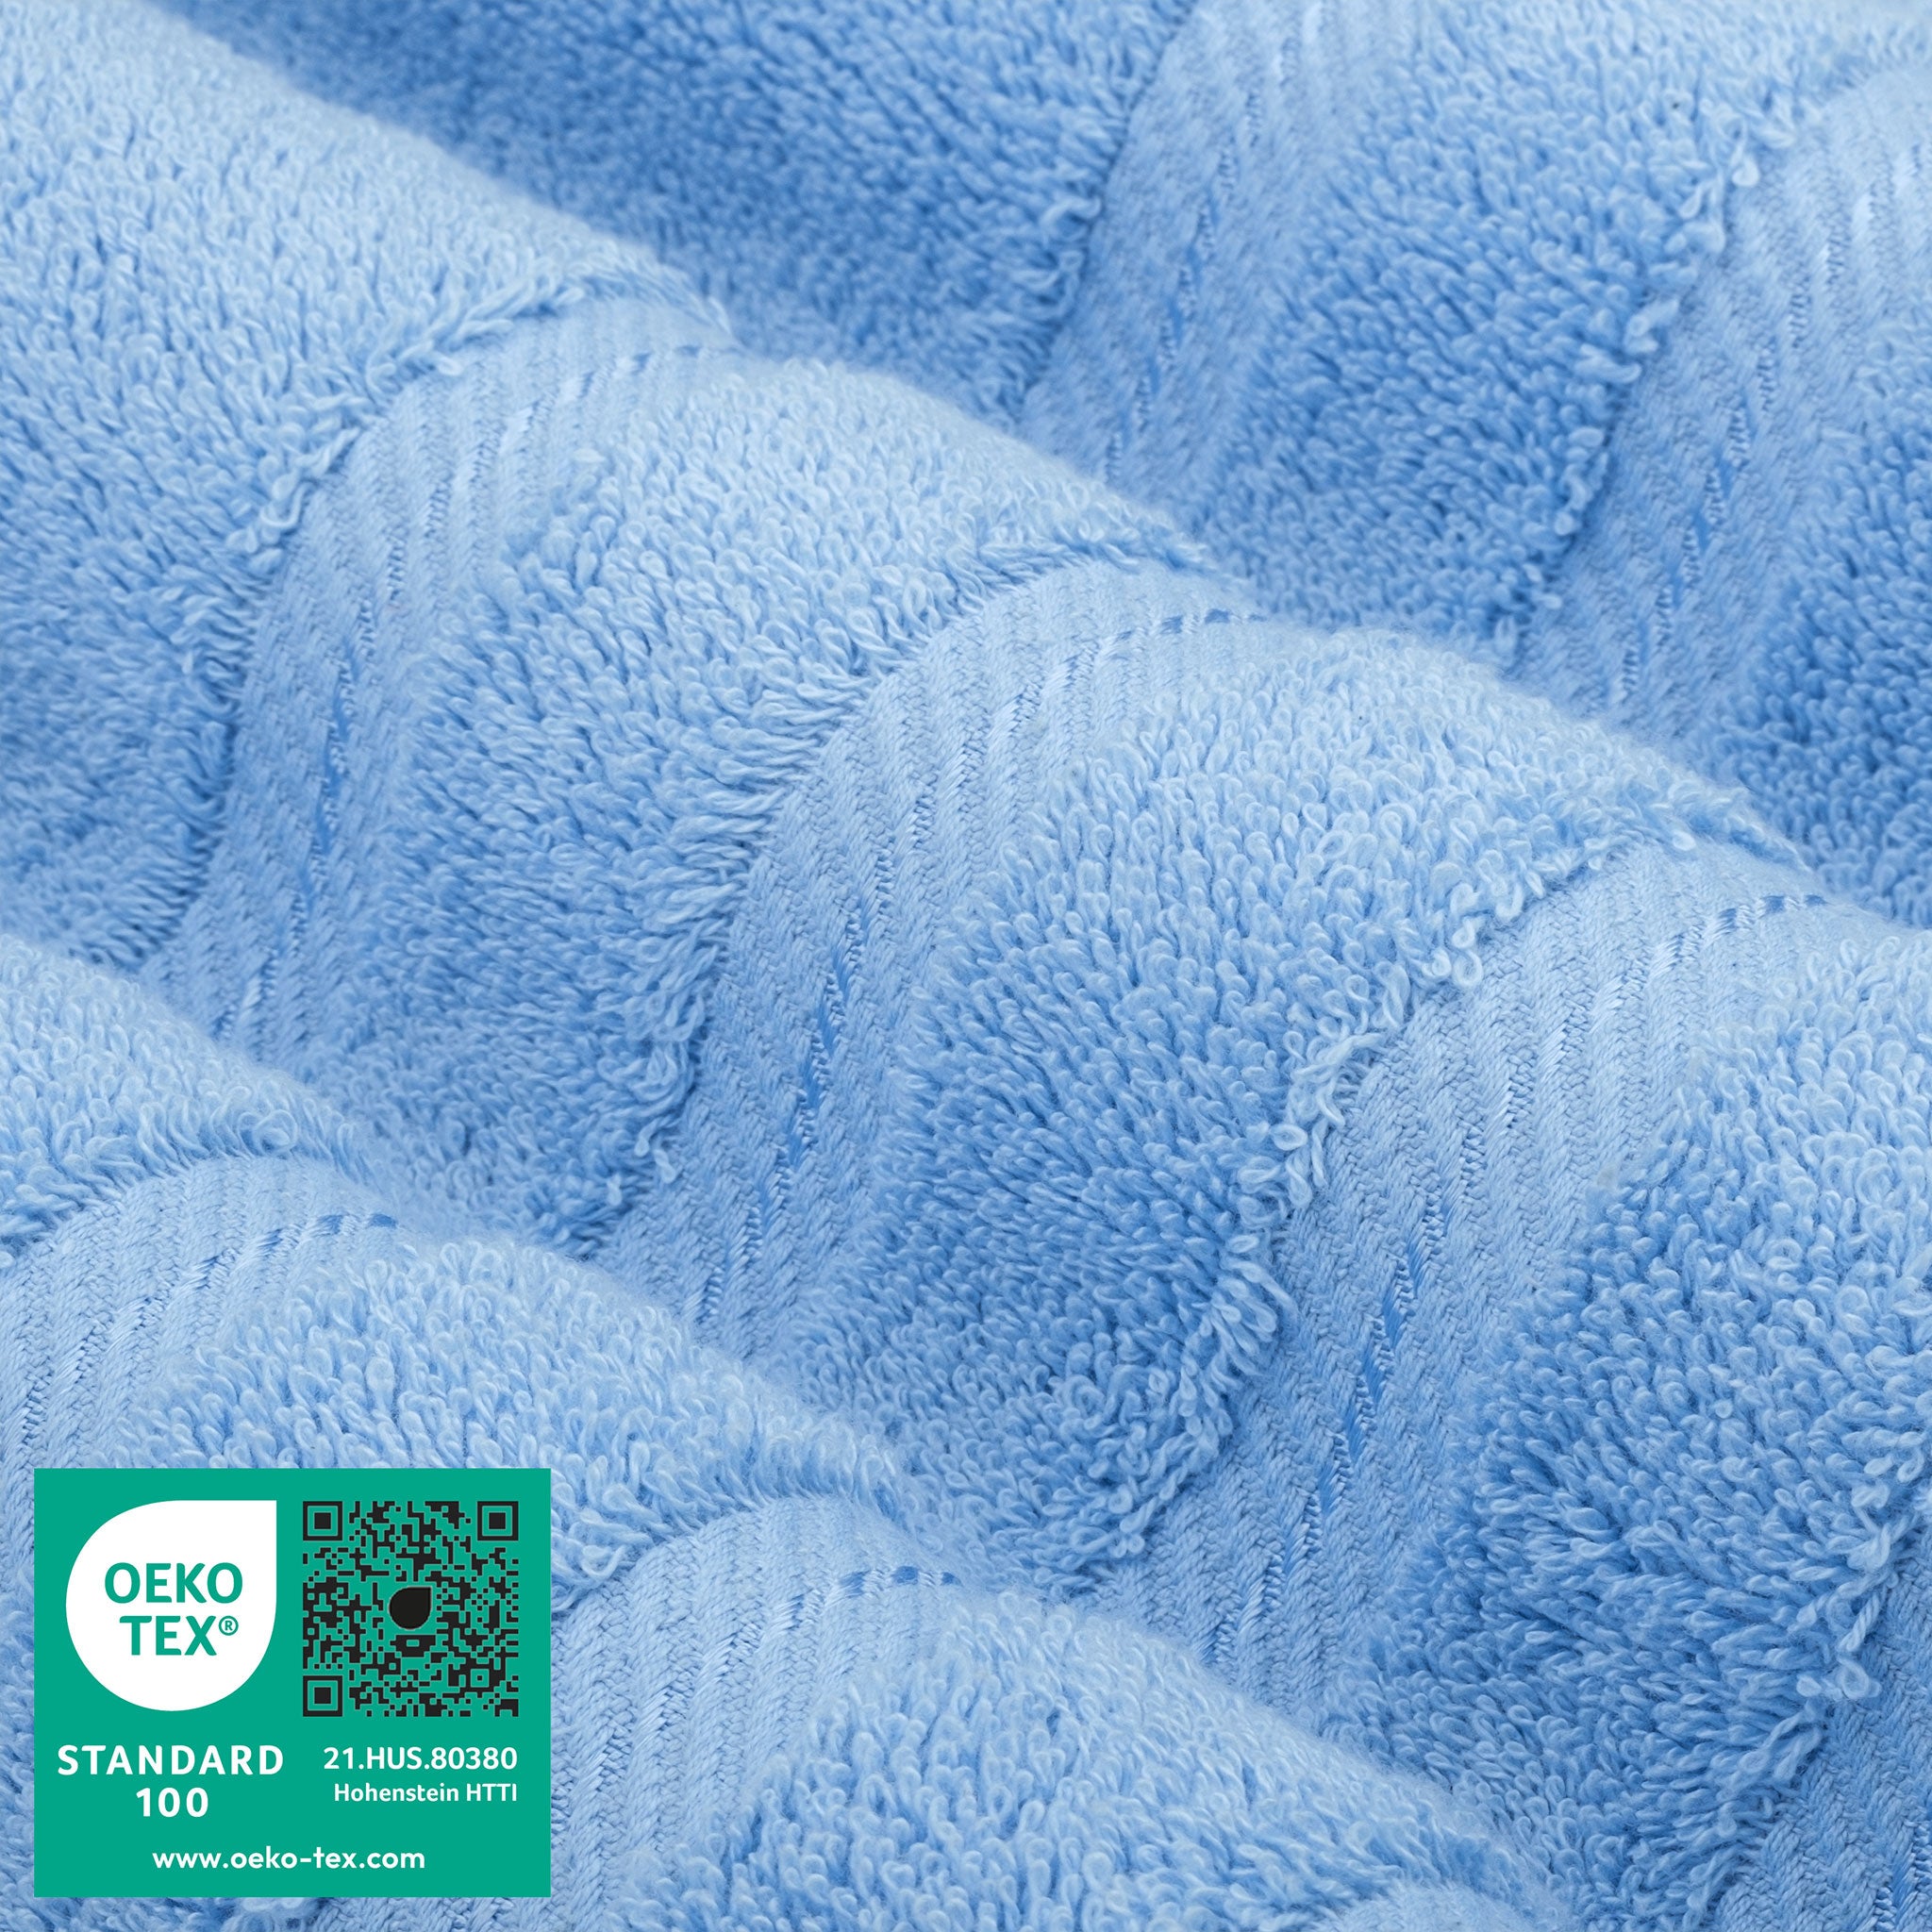 American Soft Linen - 35x70 Jumbo Bath Sheet Turkish Bath Towel - 16 Piece Case Pack - Sky-Blue - 2